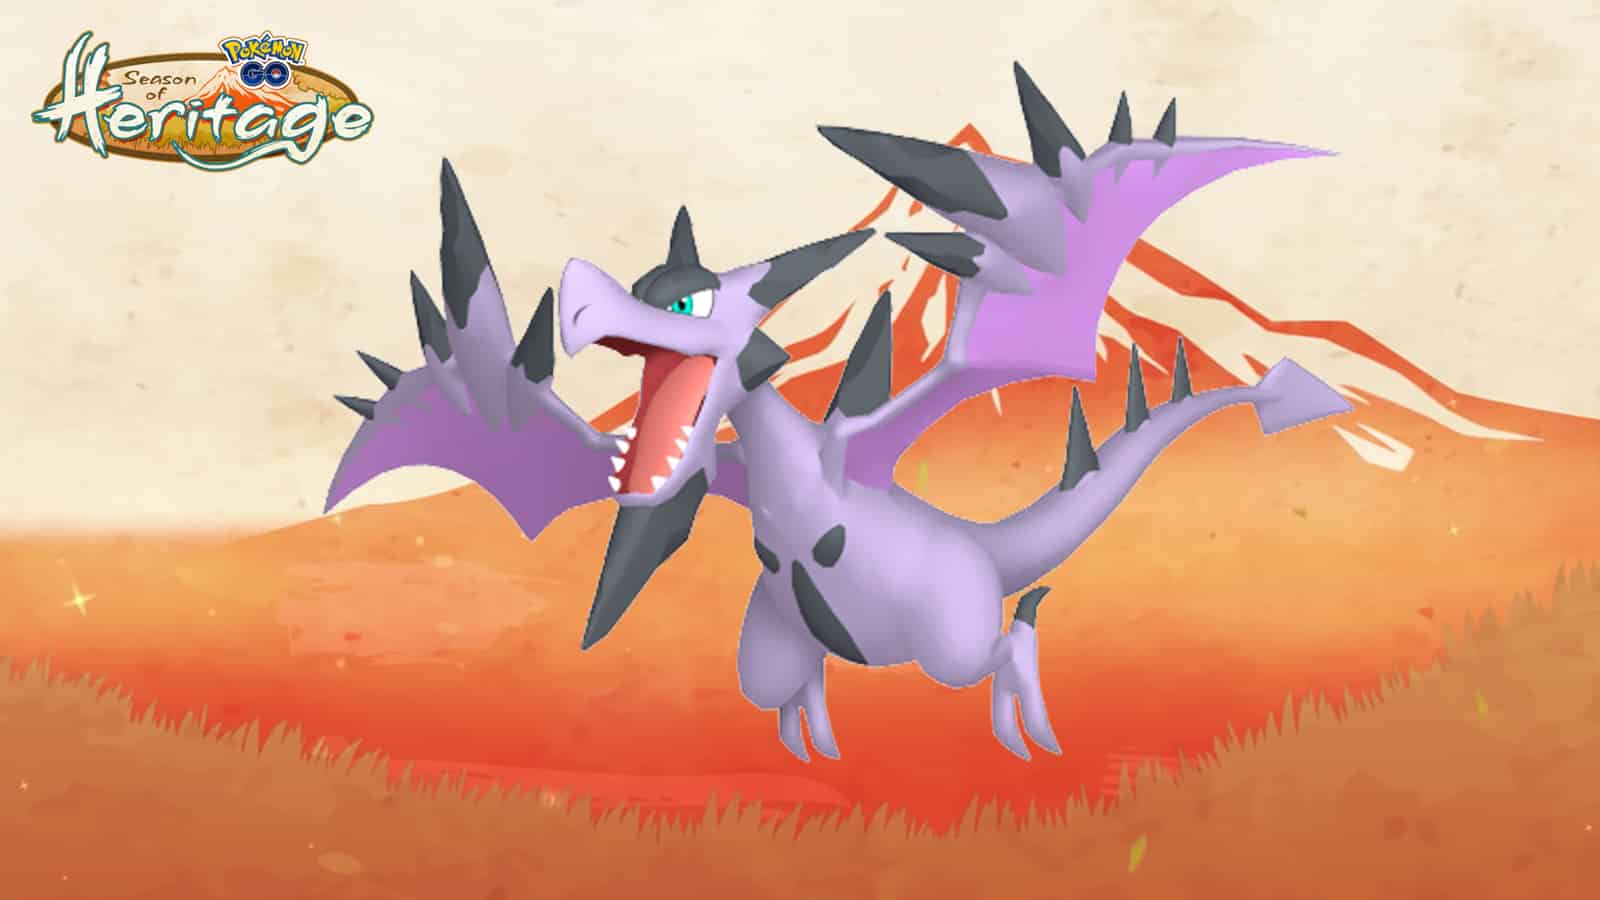 Pokémon of the Day - Aerodactyl